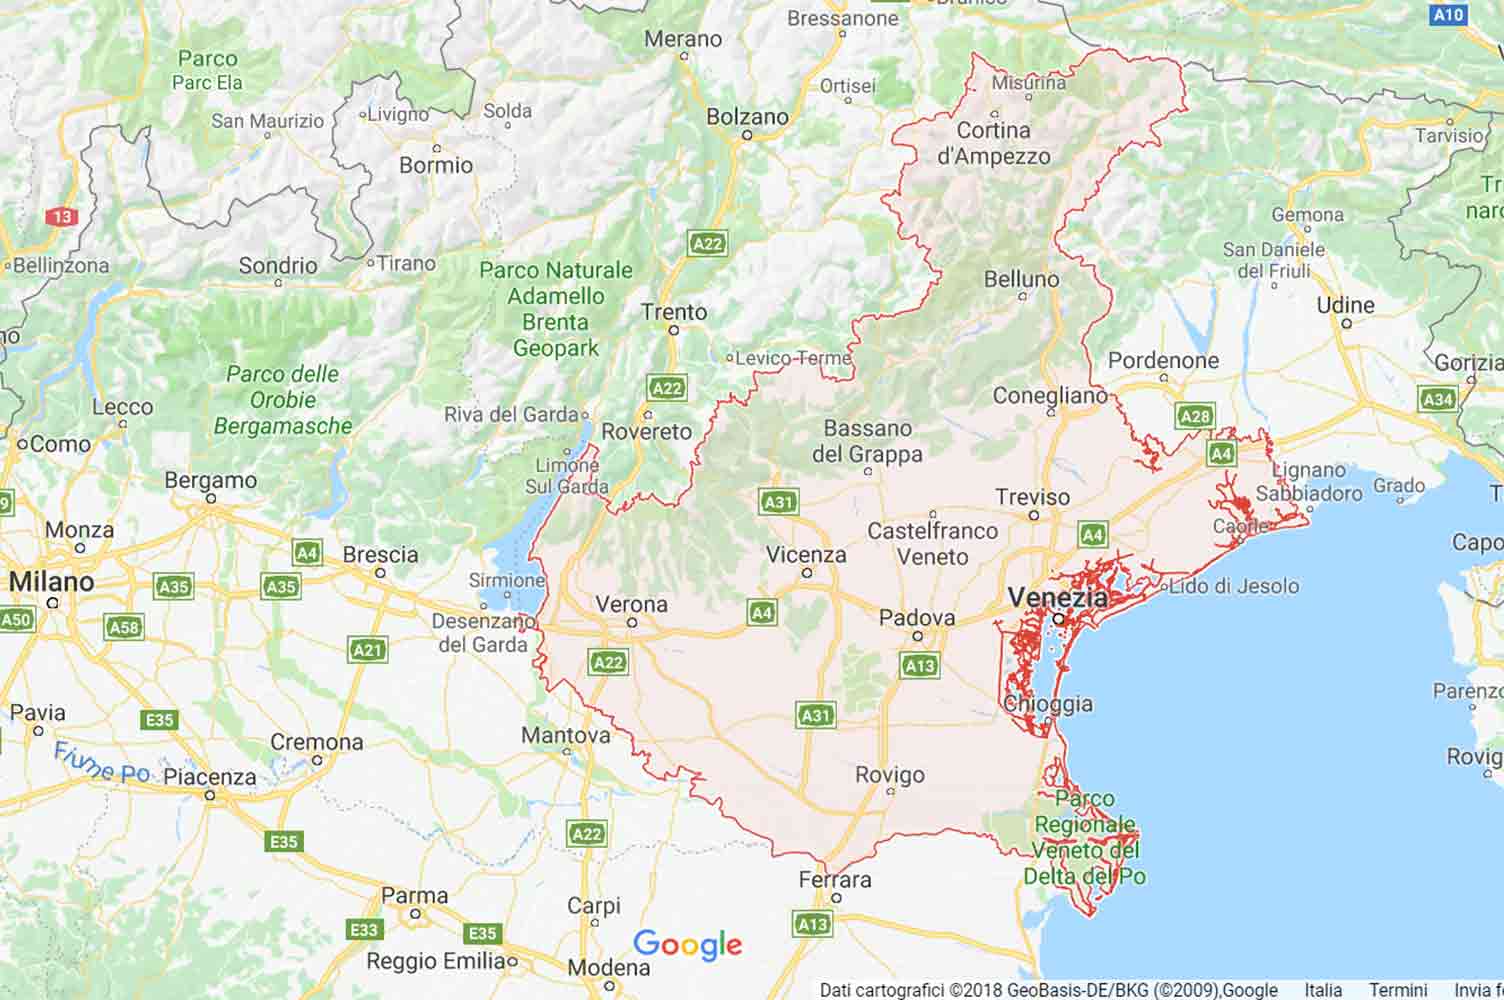 Veneto - Padova - Codevigo Preventivi Veloci google maps